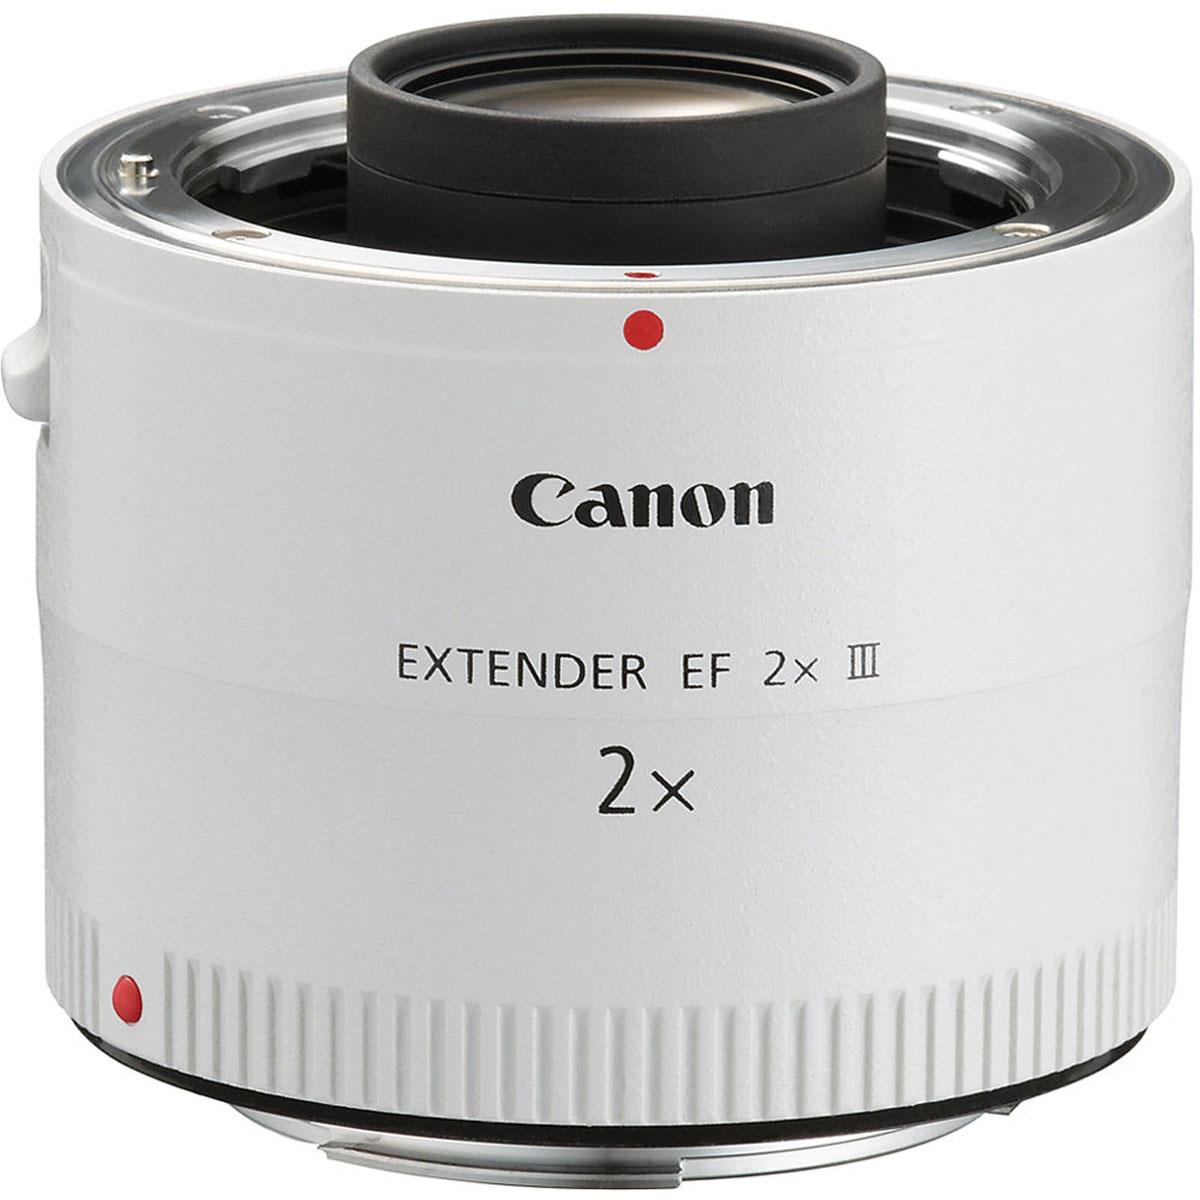 

Canon Extender EF 2x III Tele Extender, USA